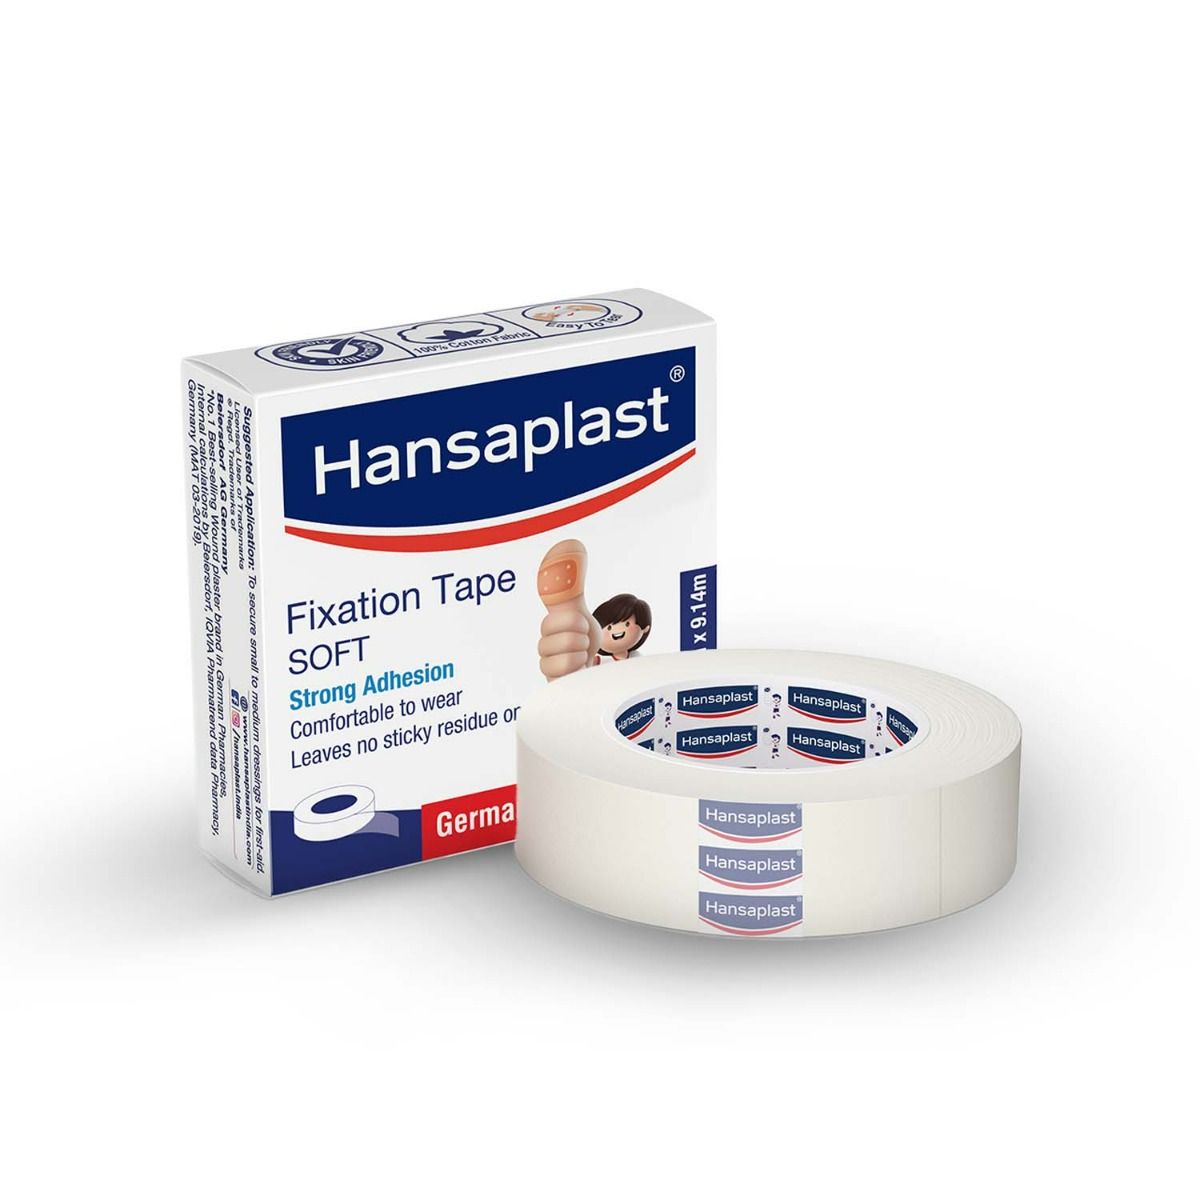 Buy Hansaplast Fixation Soft Tape 1.25 cm x 9.14 m, 1 Count Online